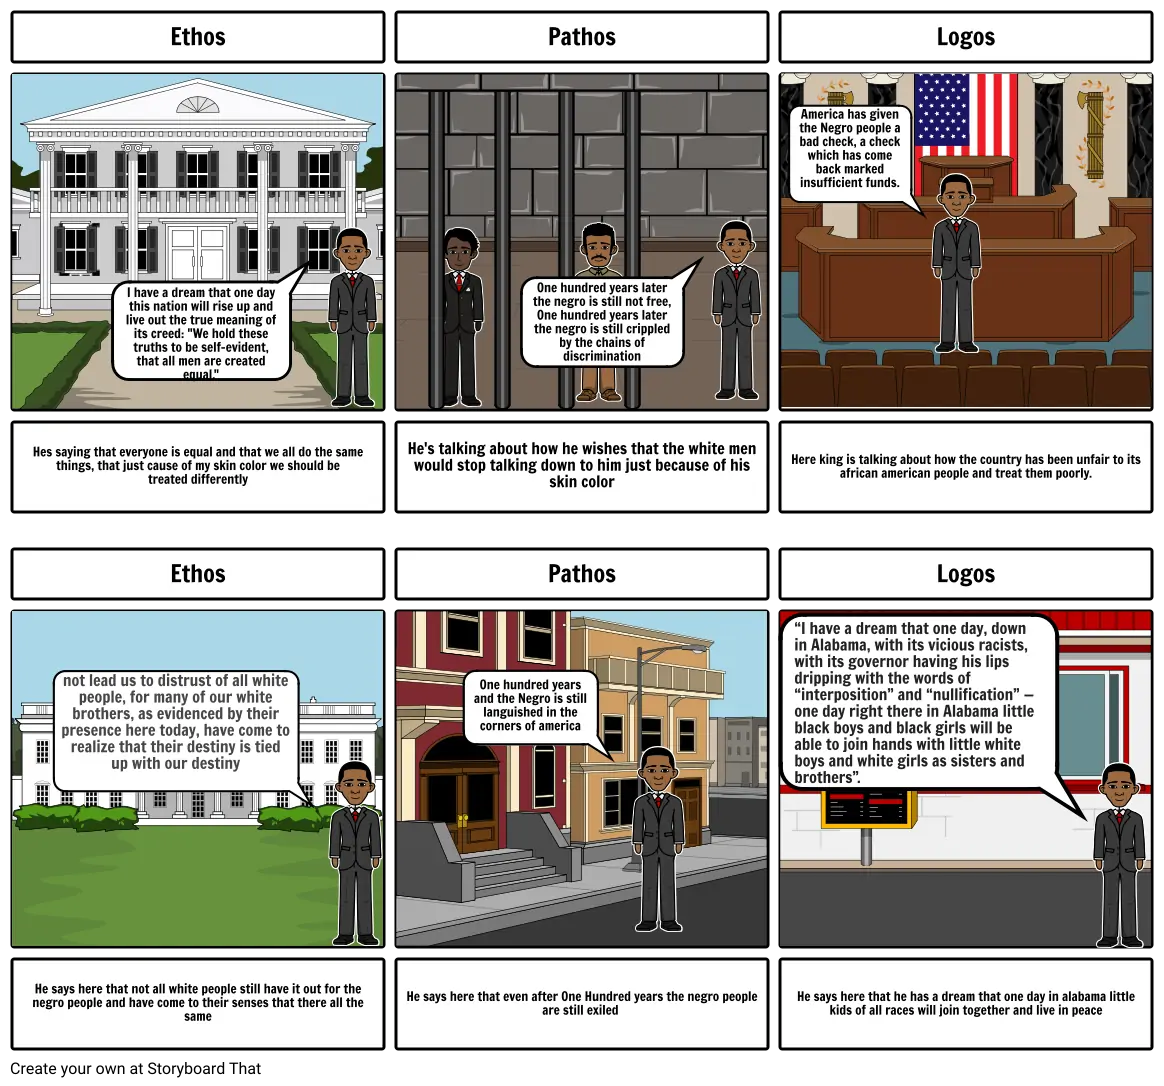 The MLK storyboard